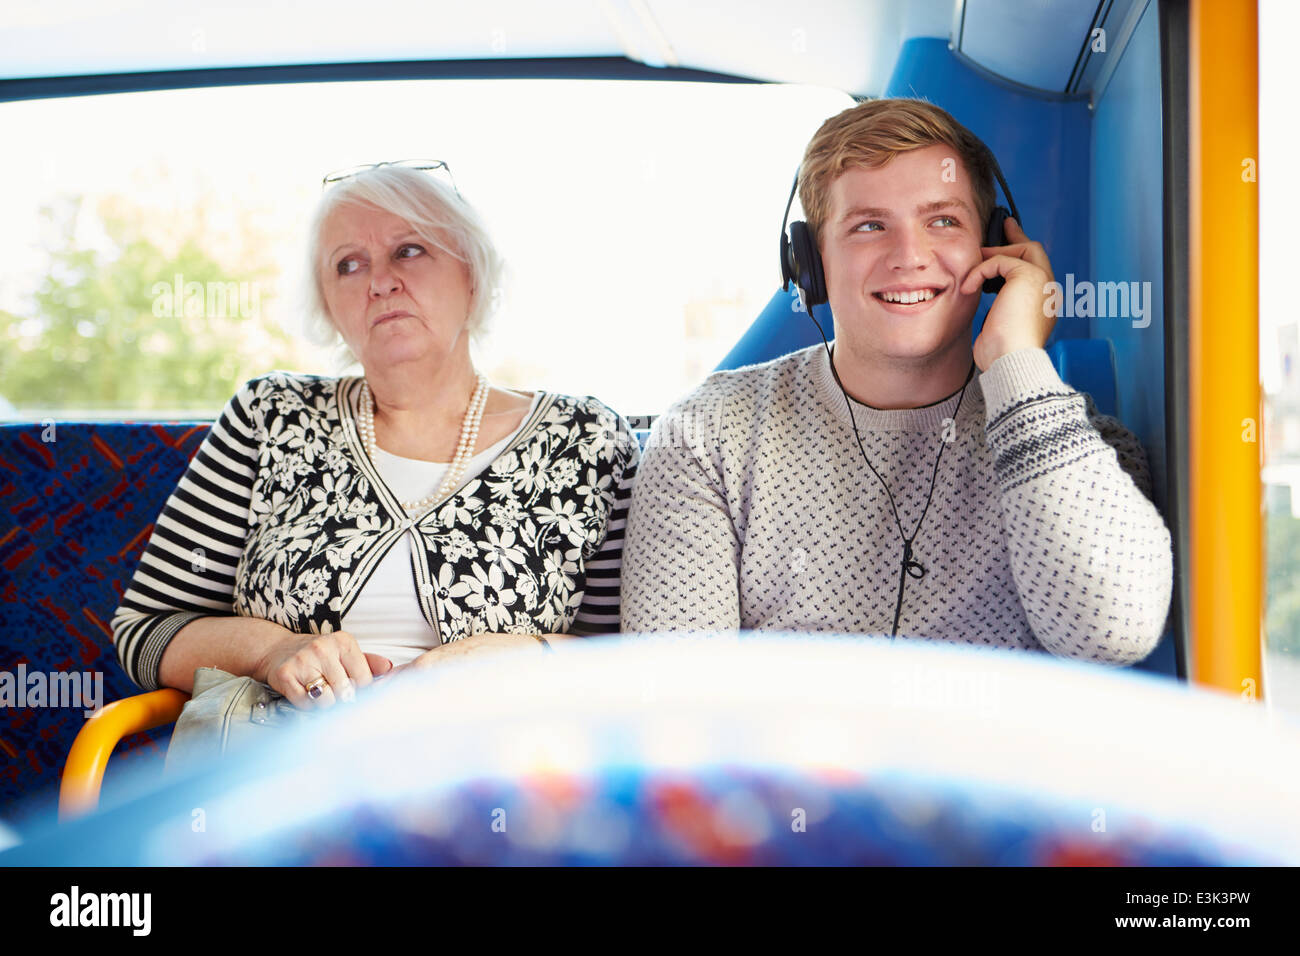 Man Disturbing Passengers On Bus Journey With Loud Music Stock Photo